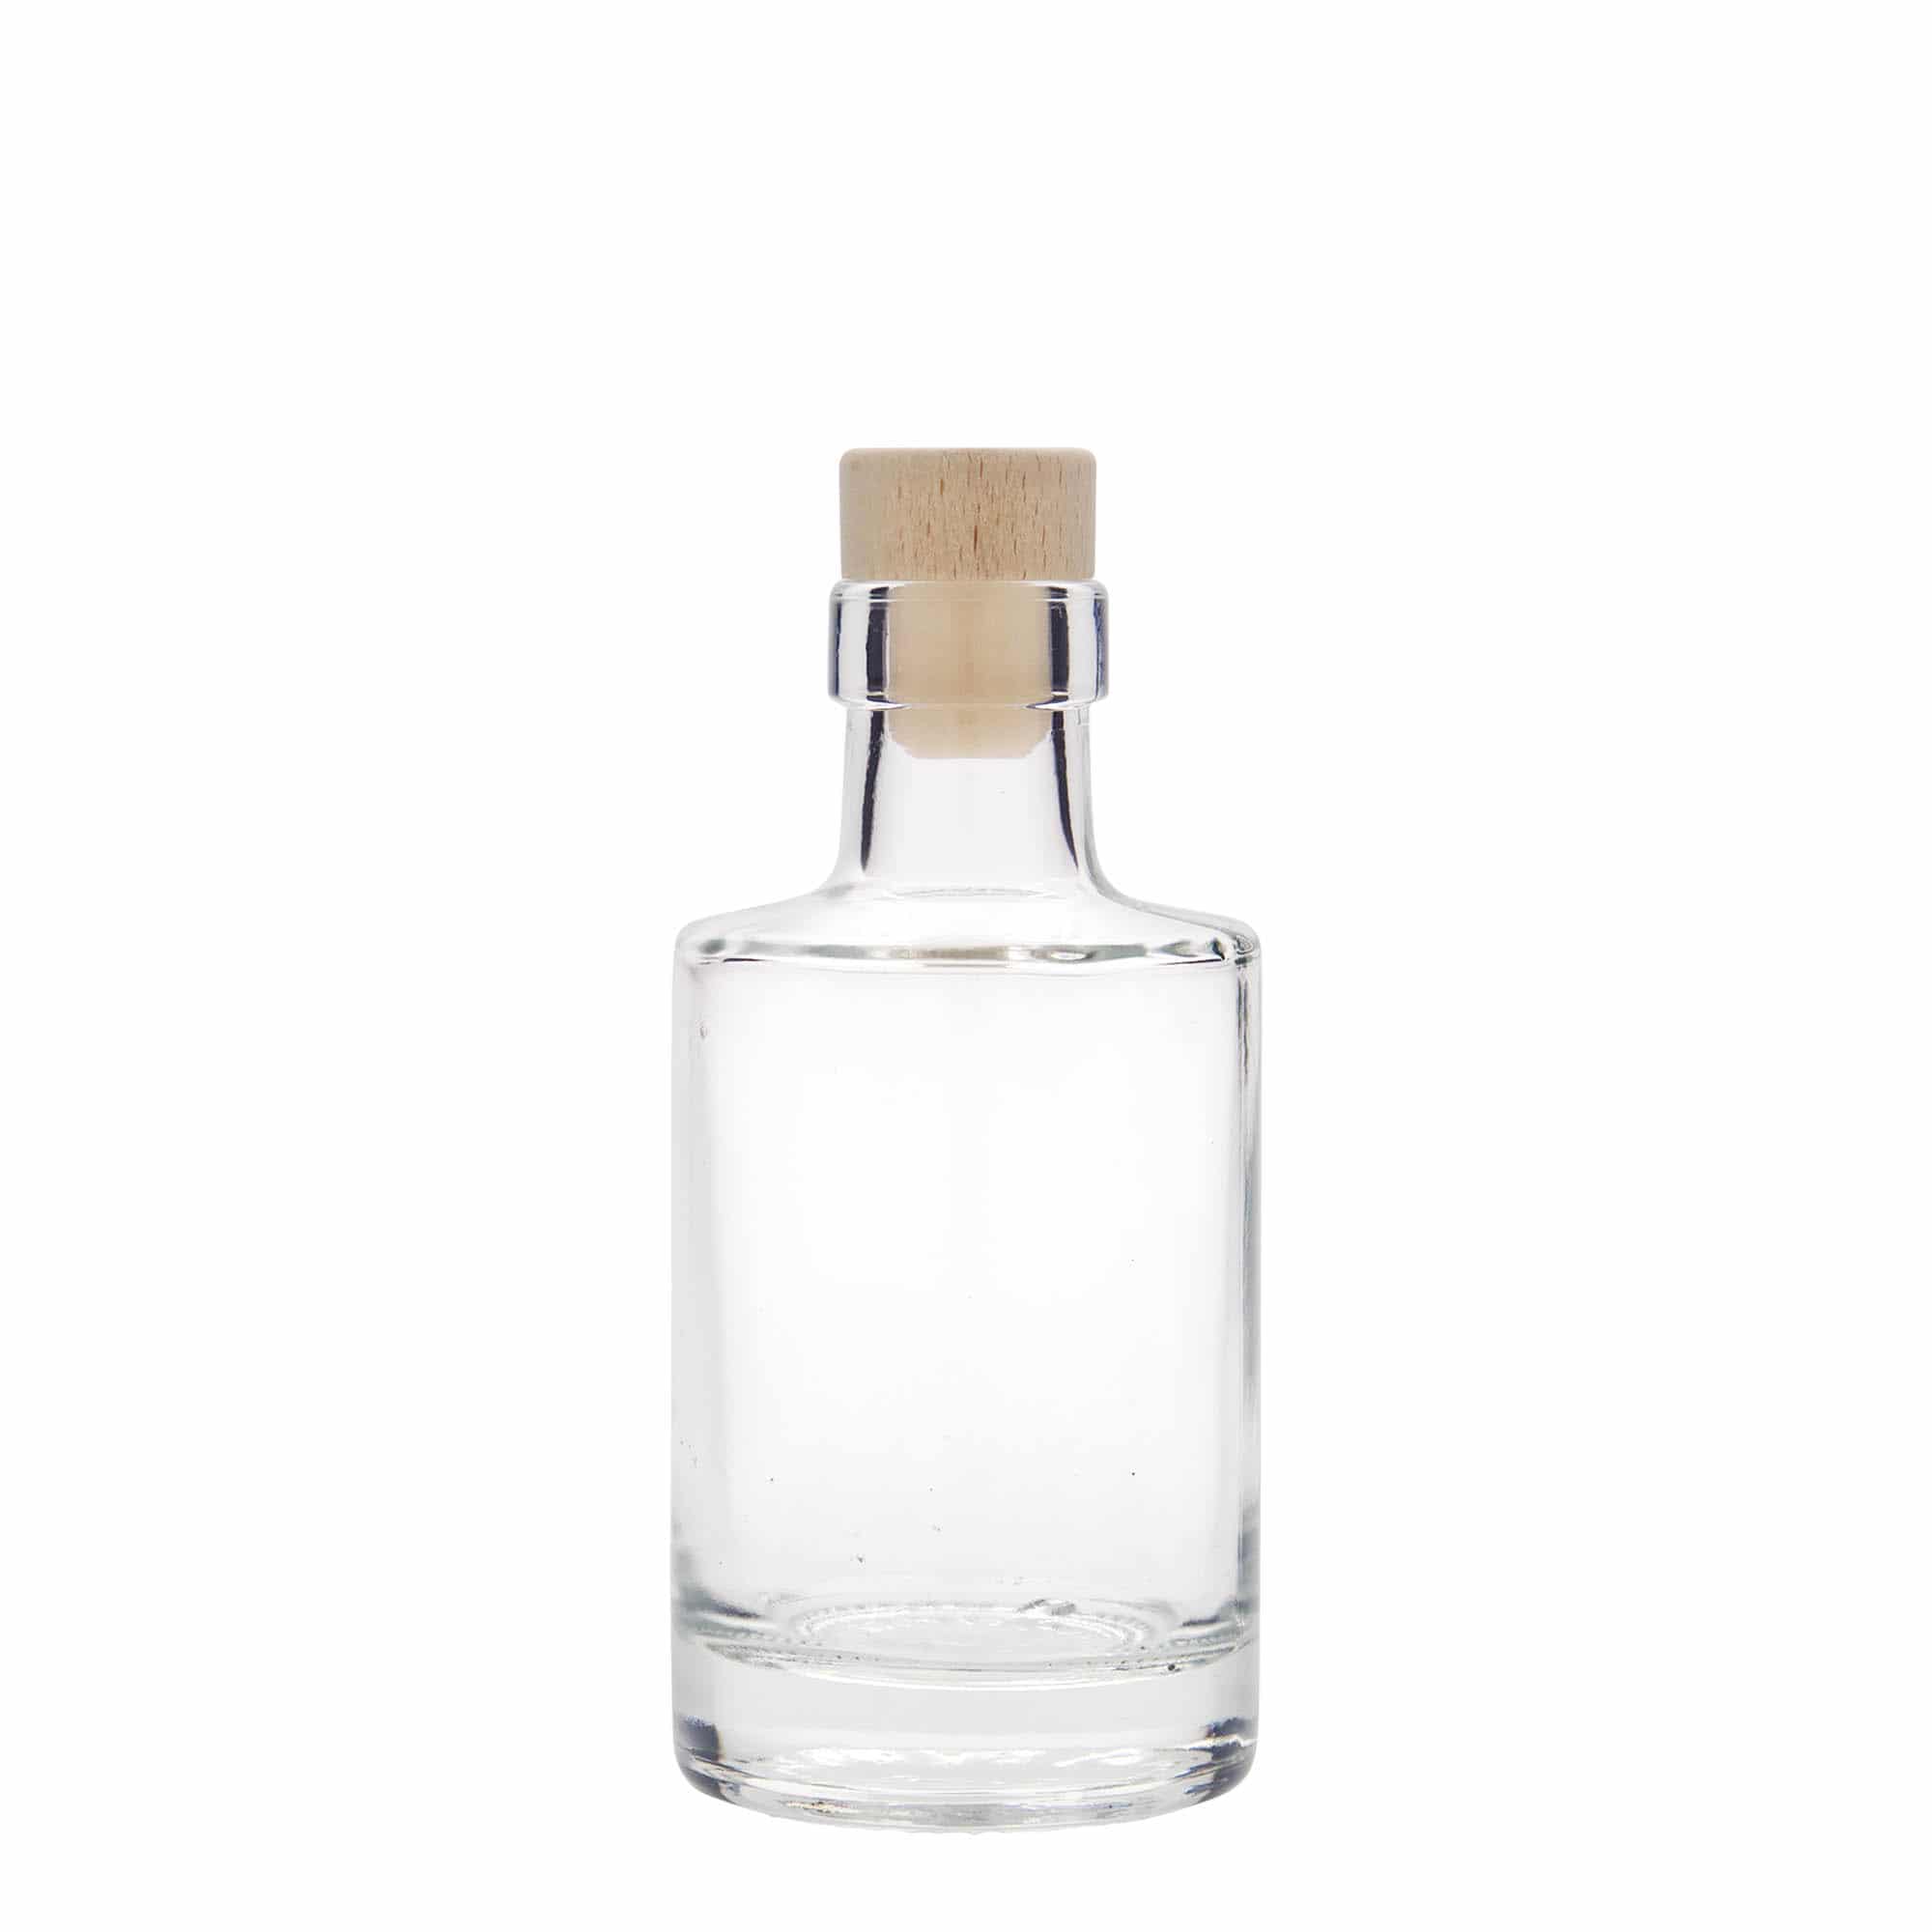 200 ml glass bottle 'Aventura', closure: cork